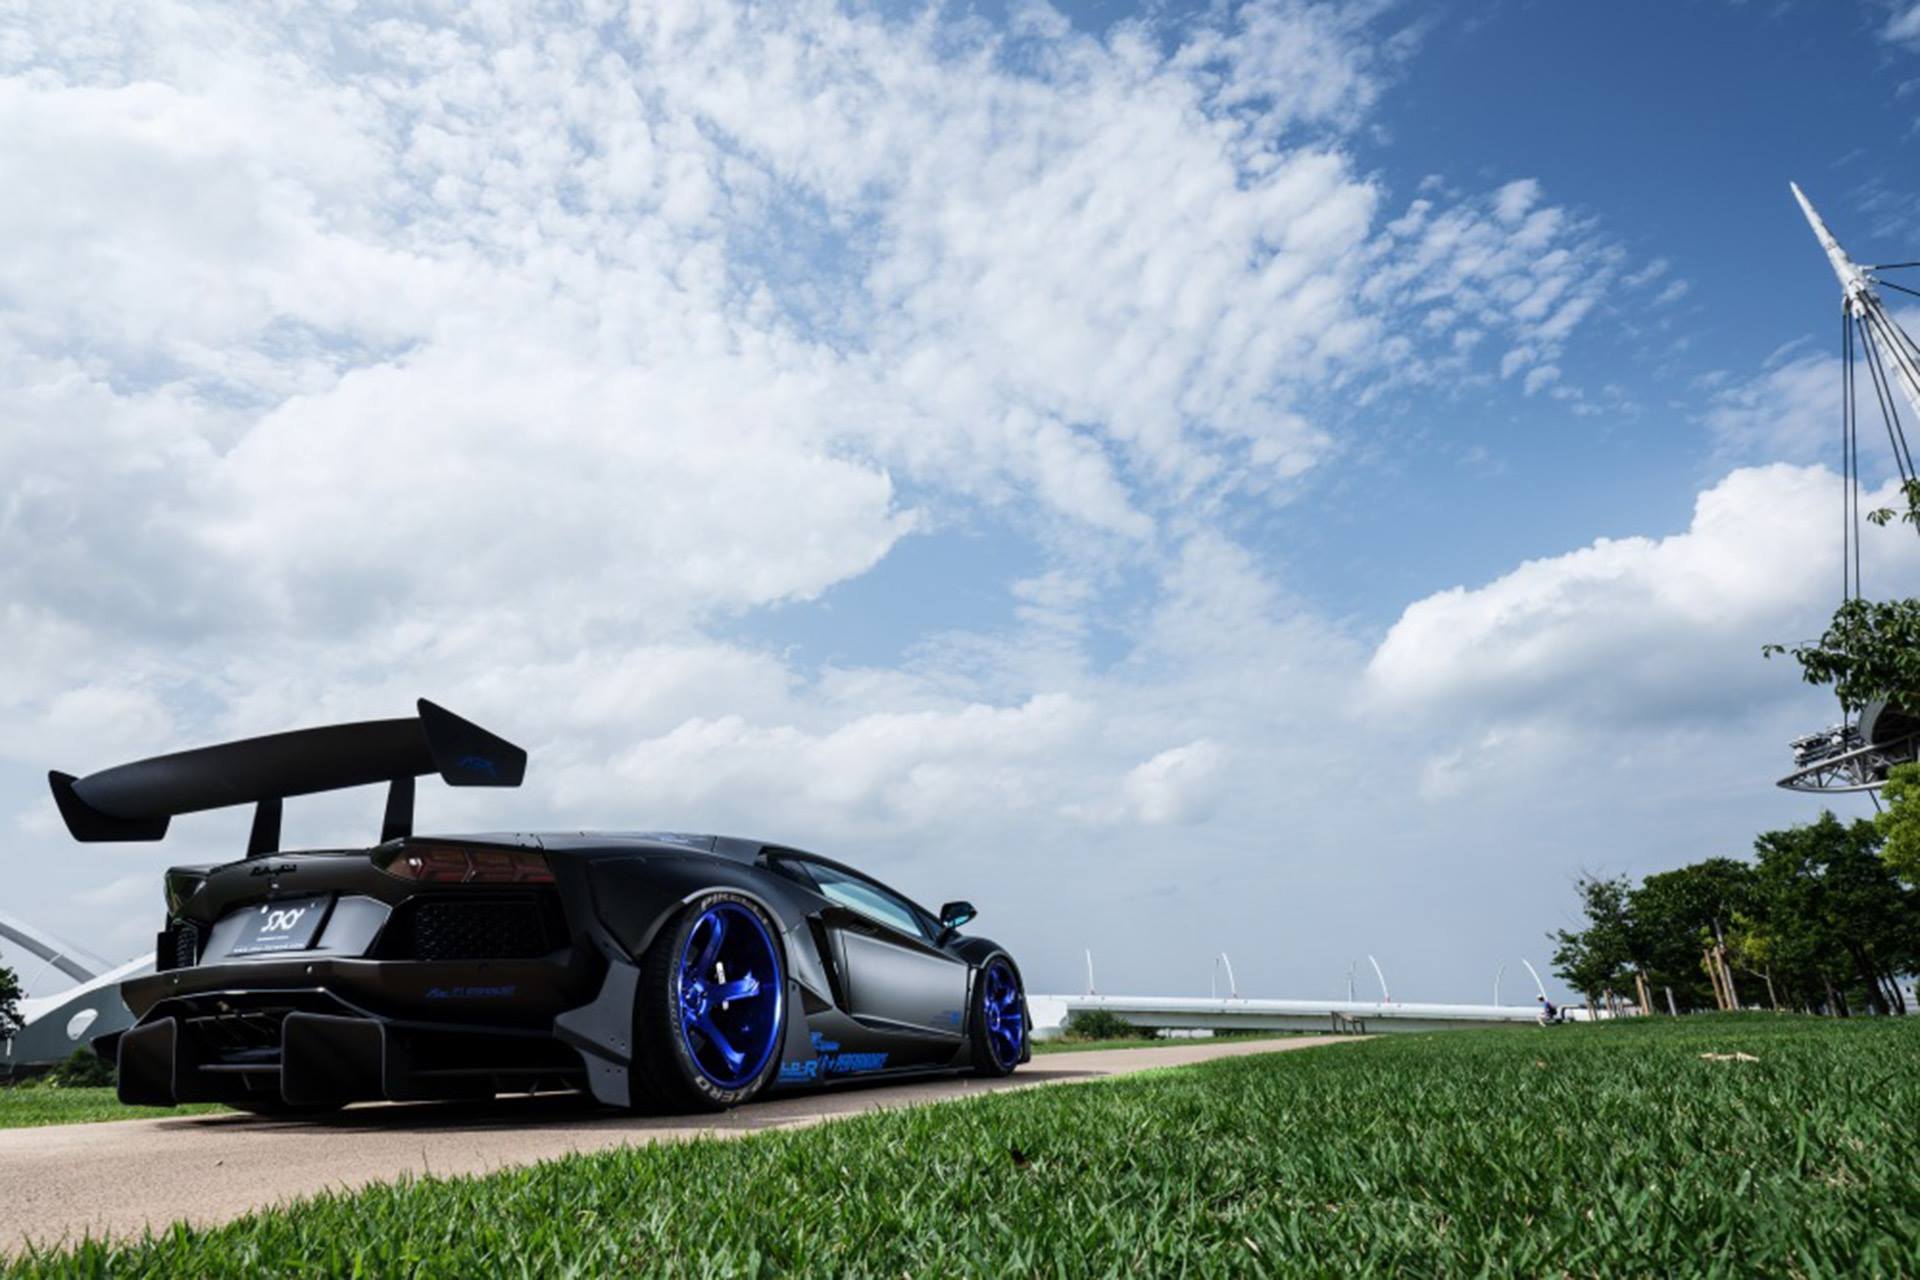 Large Wing Spoiler on Black Matte Lamborghini Aventador - Photo by Forgiato